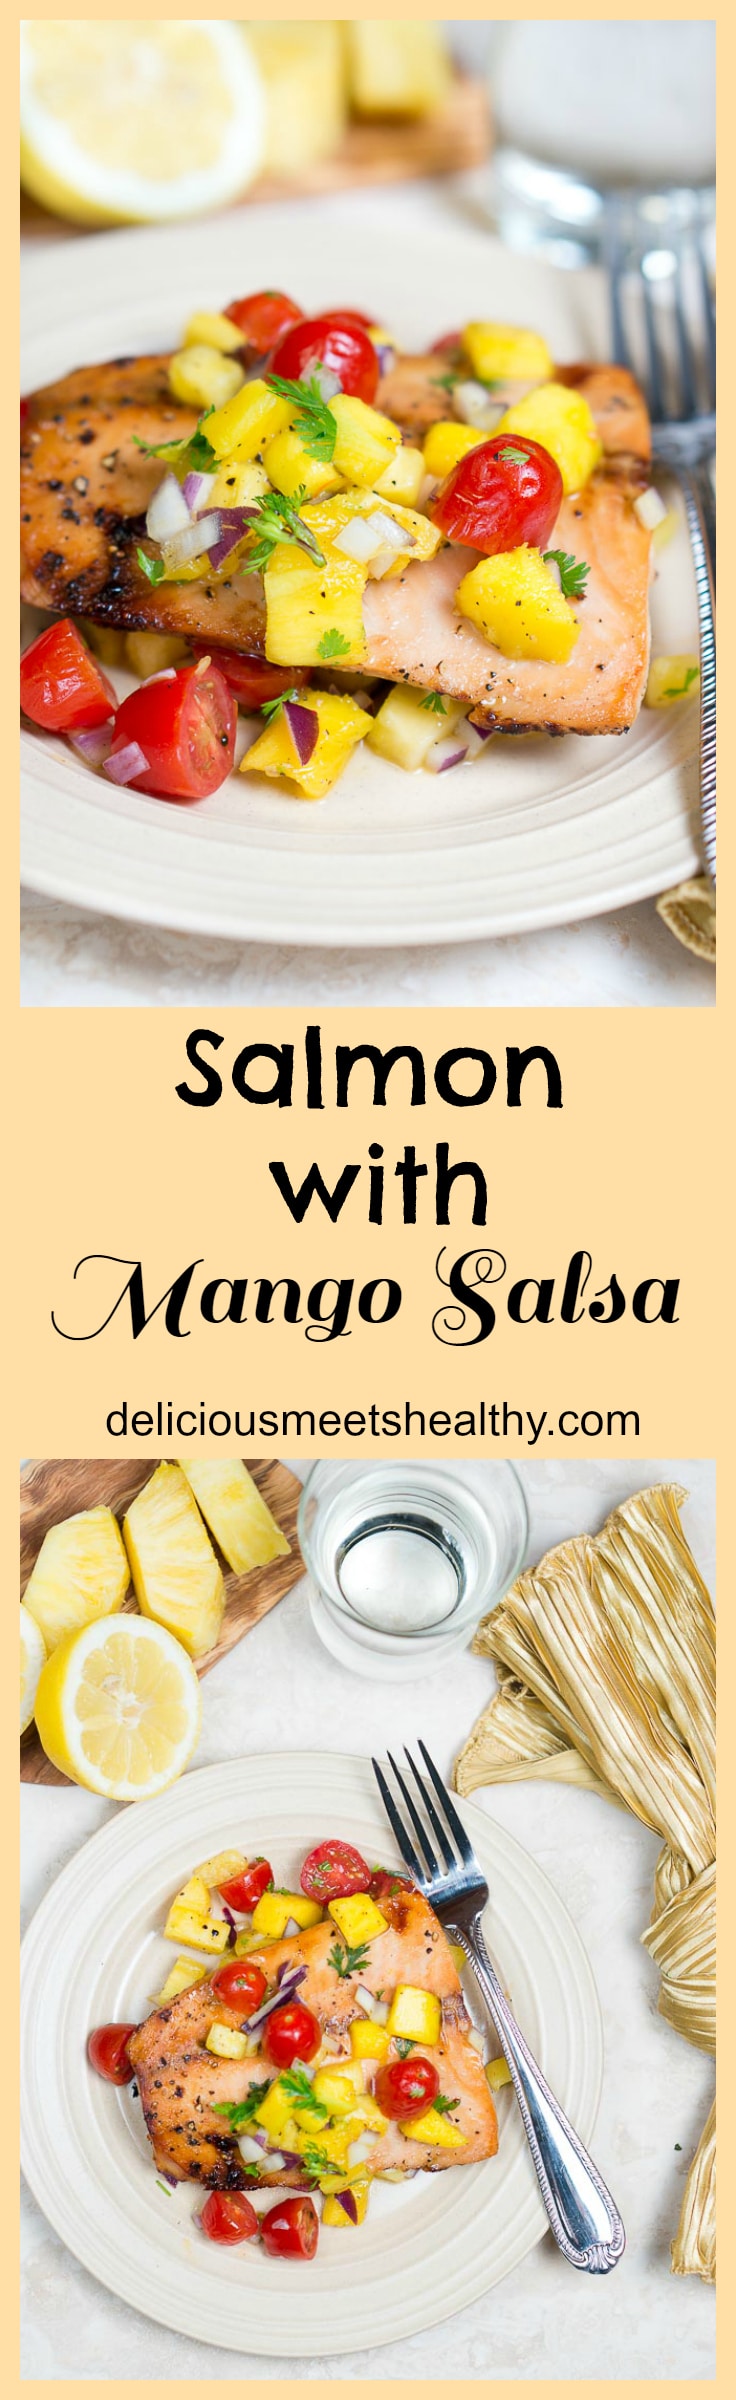 salmon with mango salsa